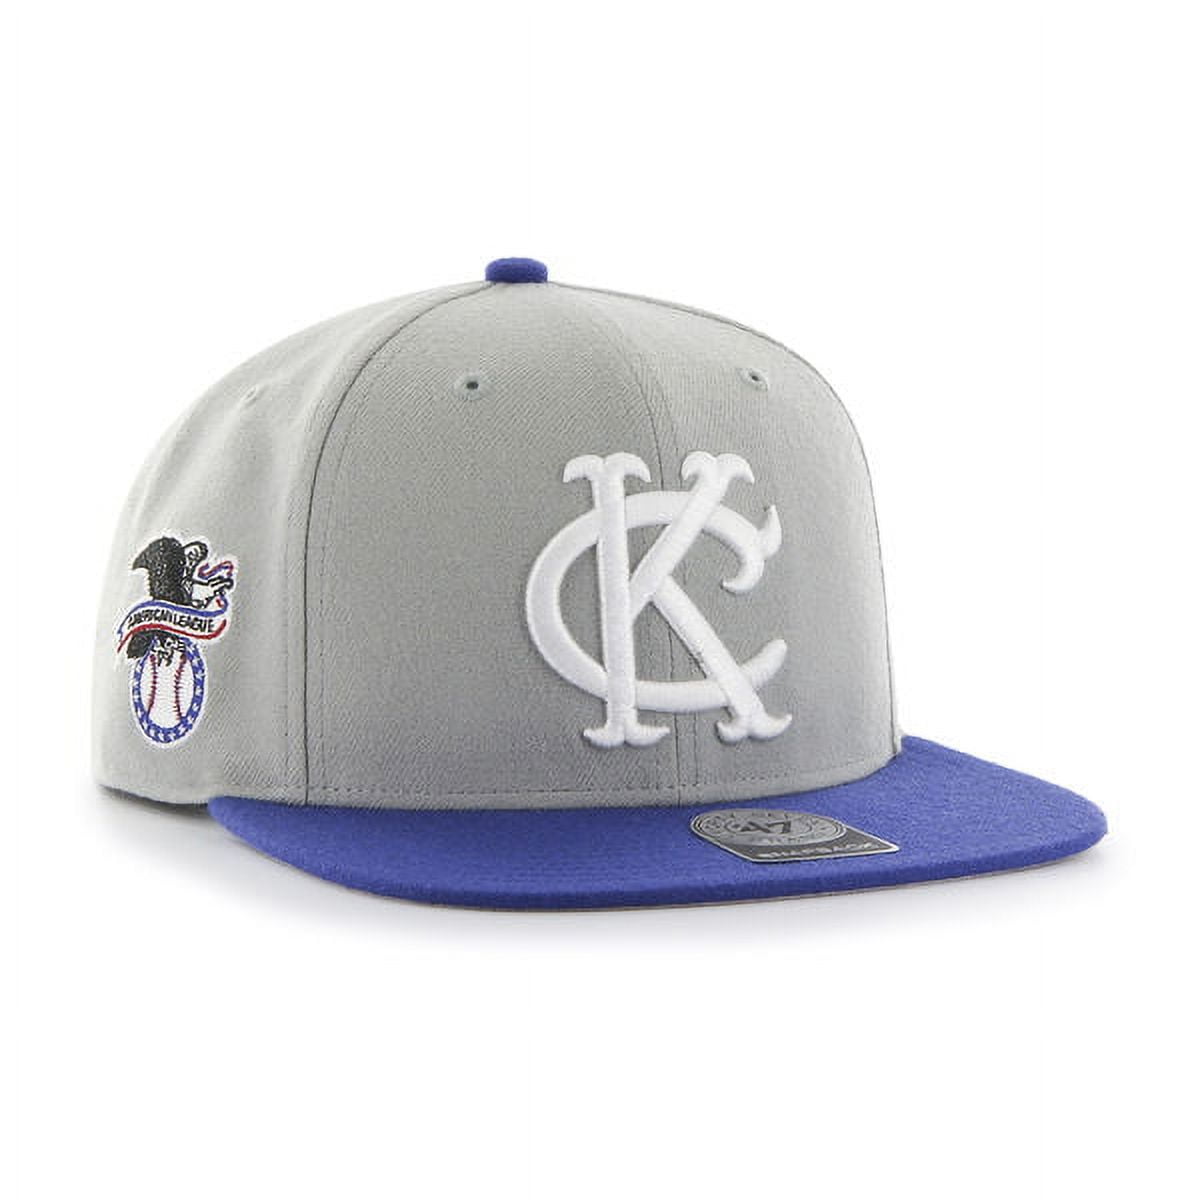 Kansas City Royals Men's 47 Brand One Size Hat